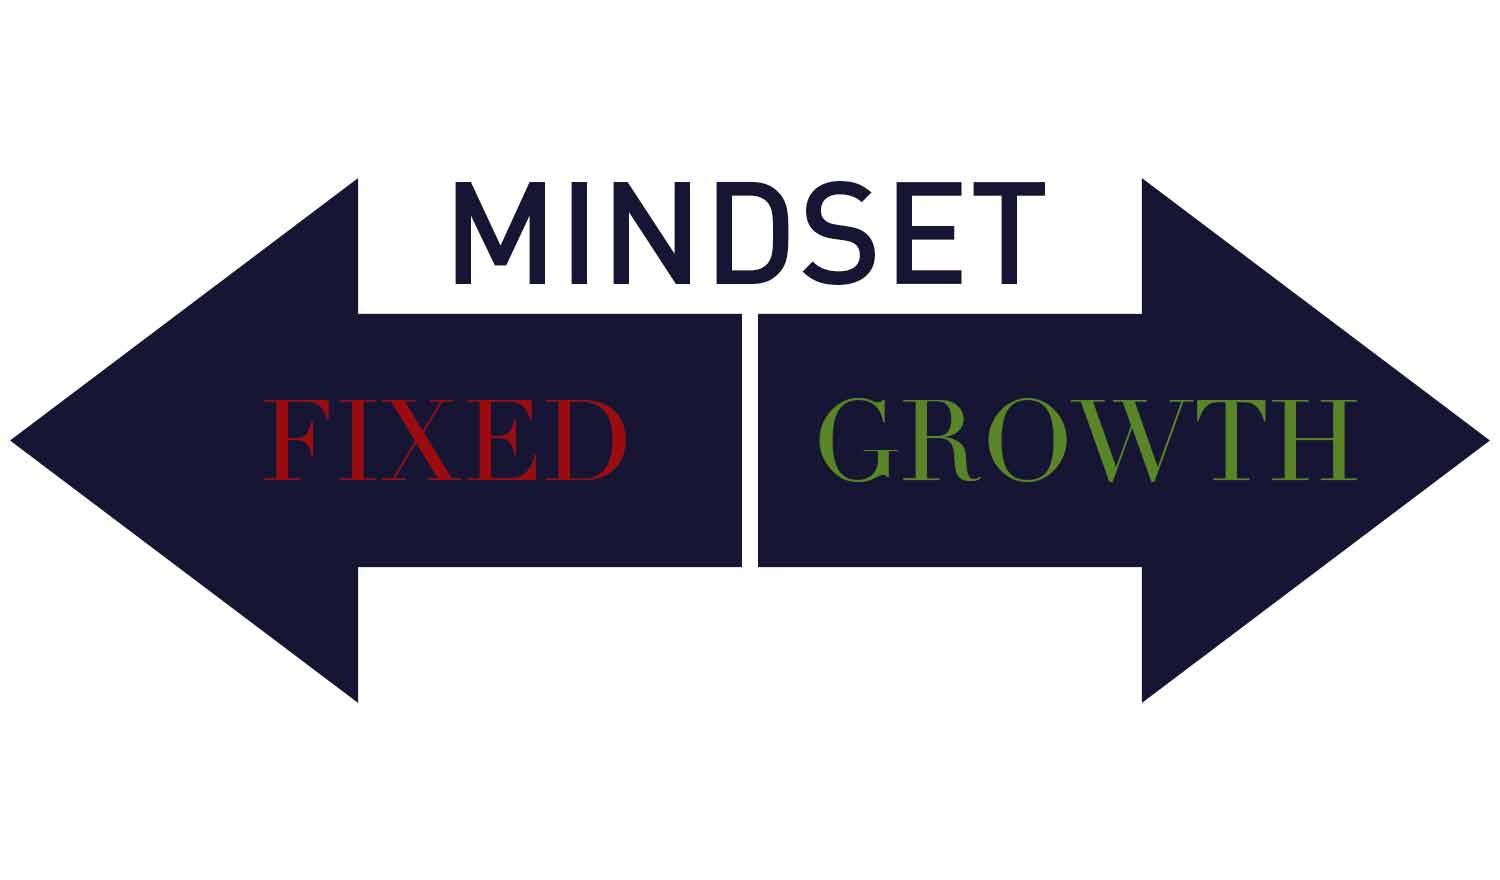 fixed mindset vs growth mindset